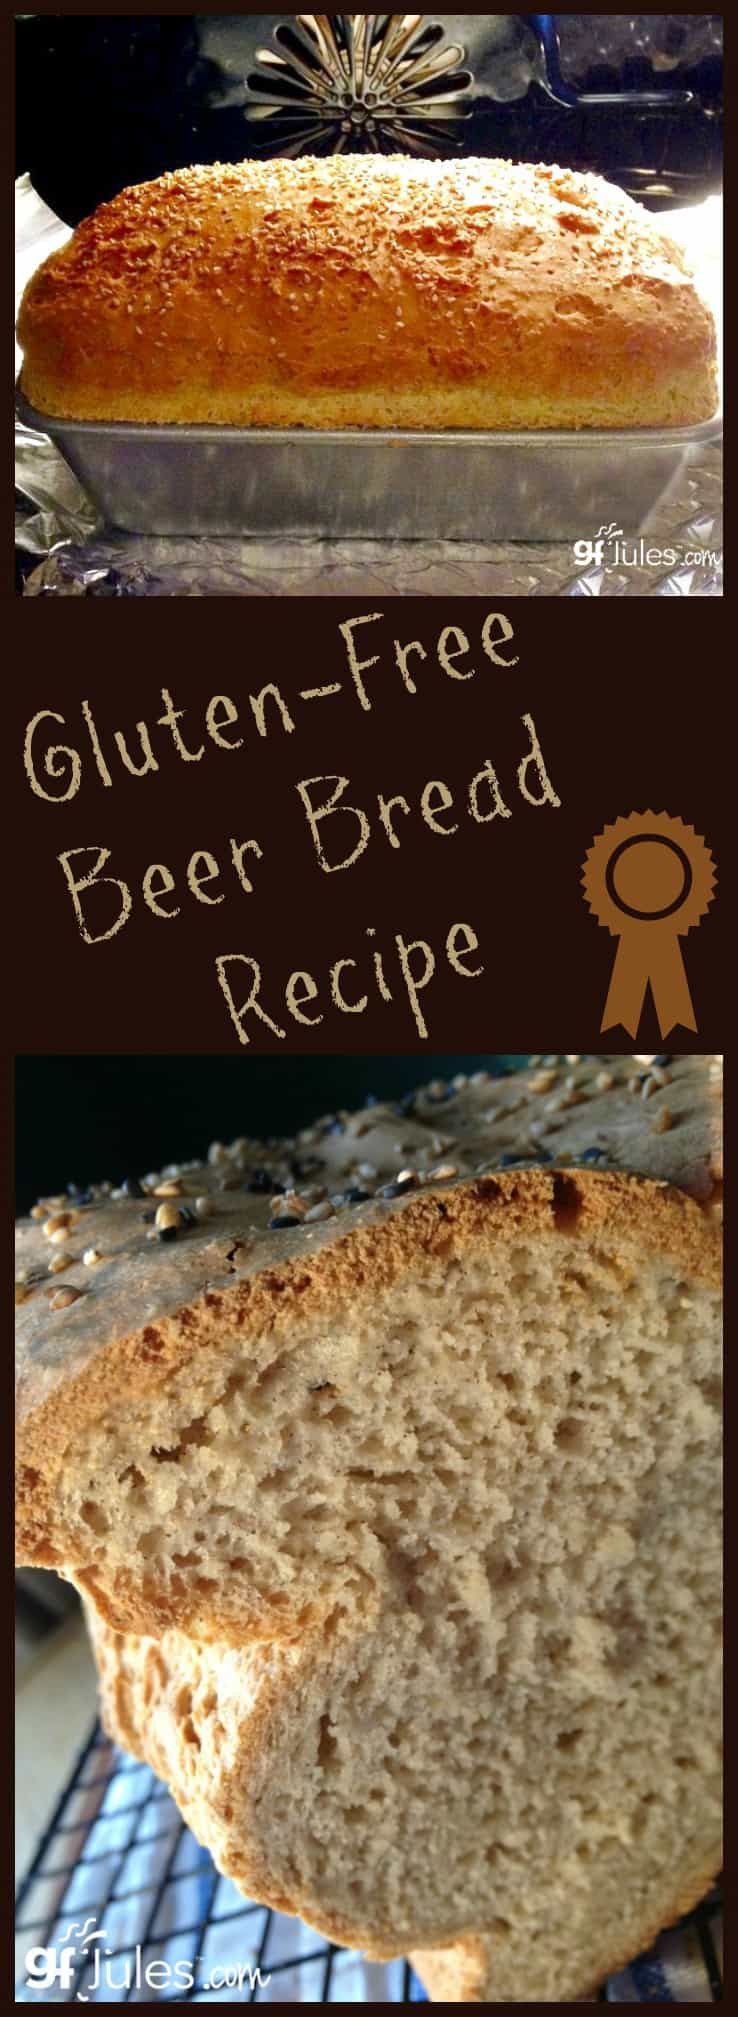 Gluten Free Beer Recipes
 Gluten Free Beer Bread Recipe Bread Machine or Oven EPIC